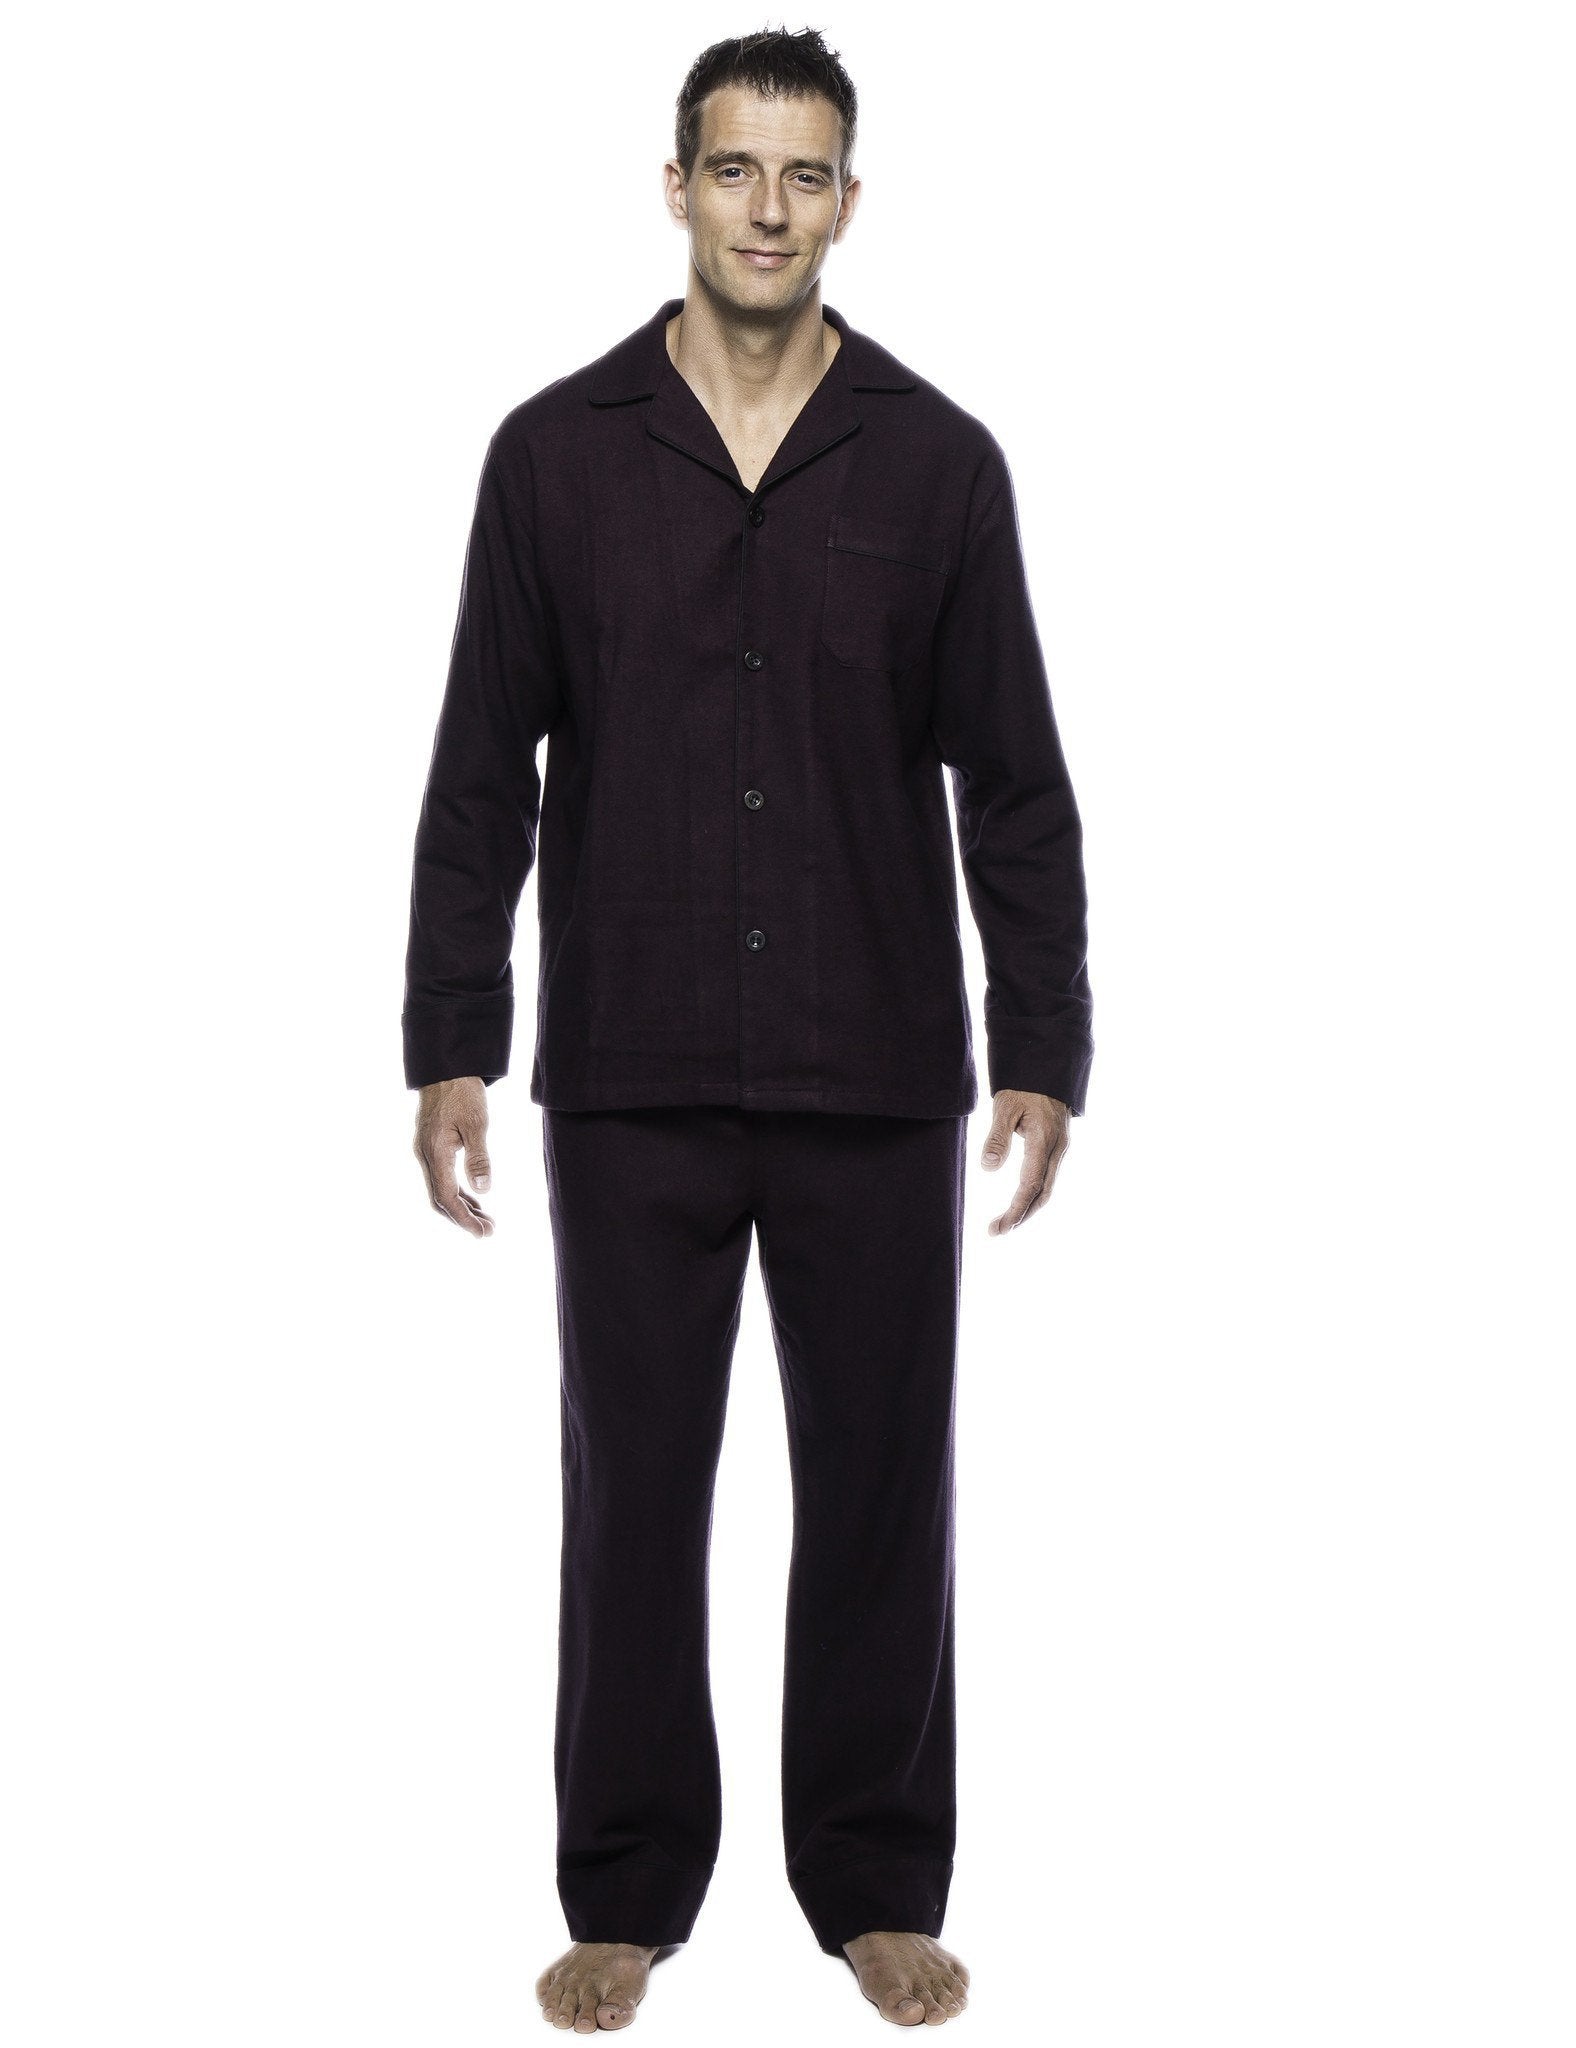 Box Packaged Men's Premium 100% Cotton Flannel Pajama Sleepwear Set - Herringbone Fig/Black